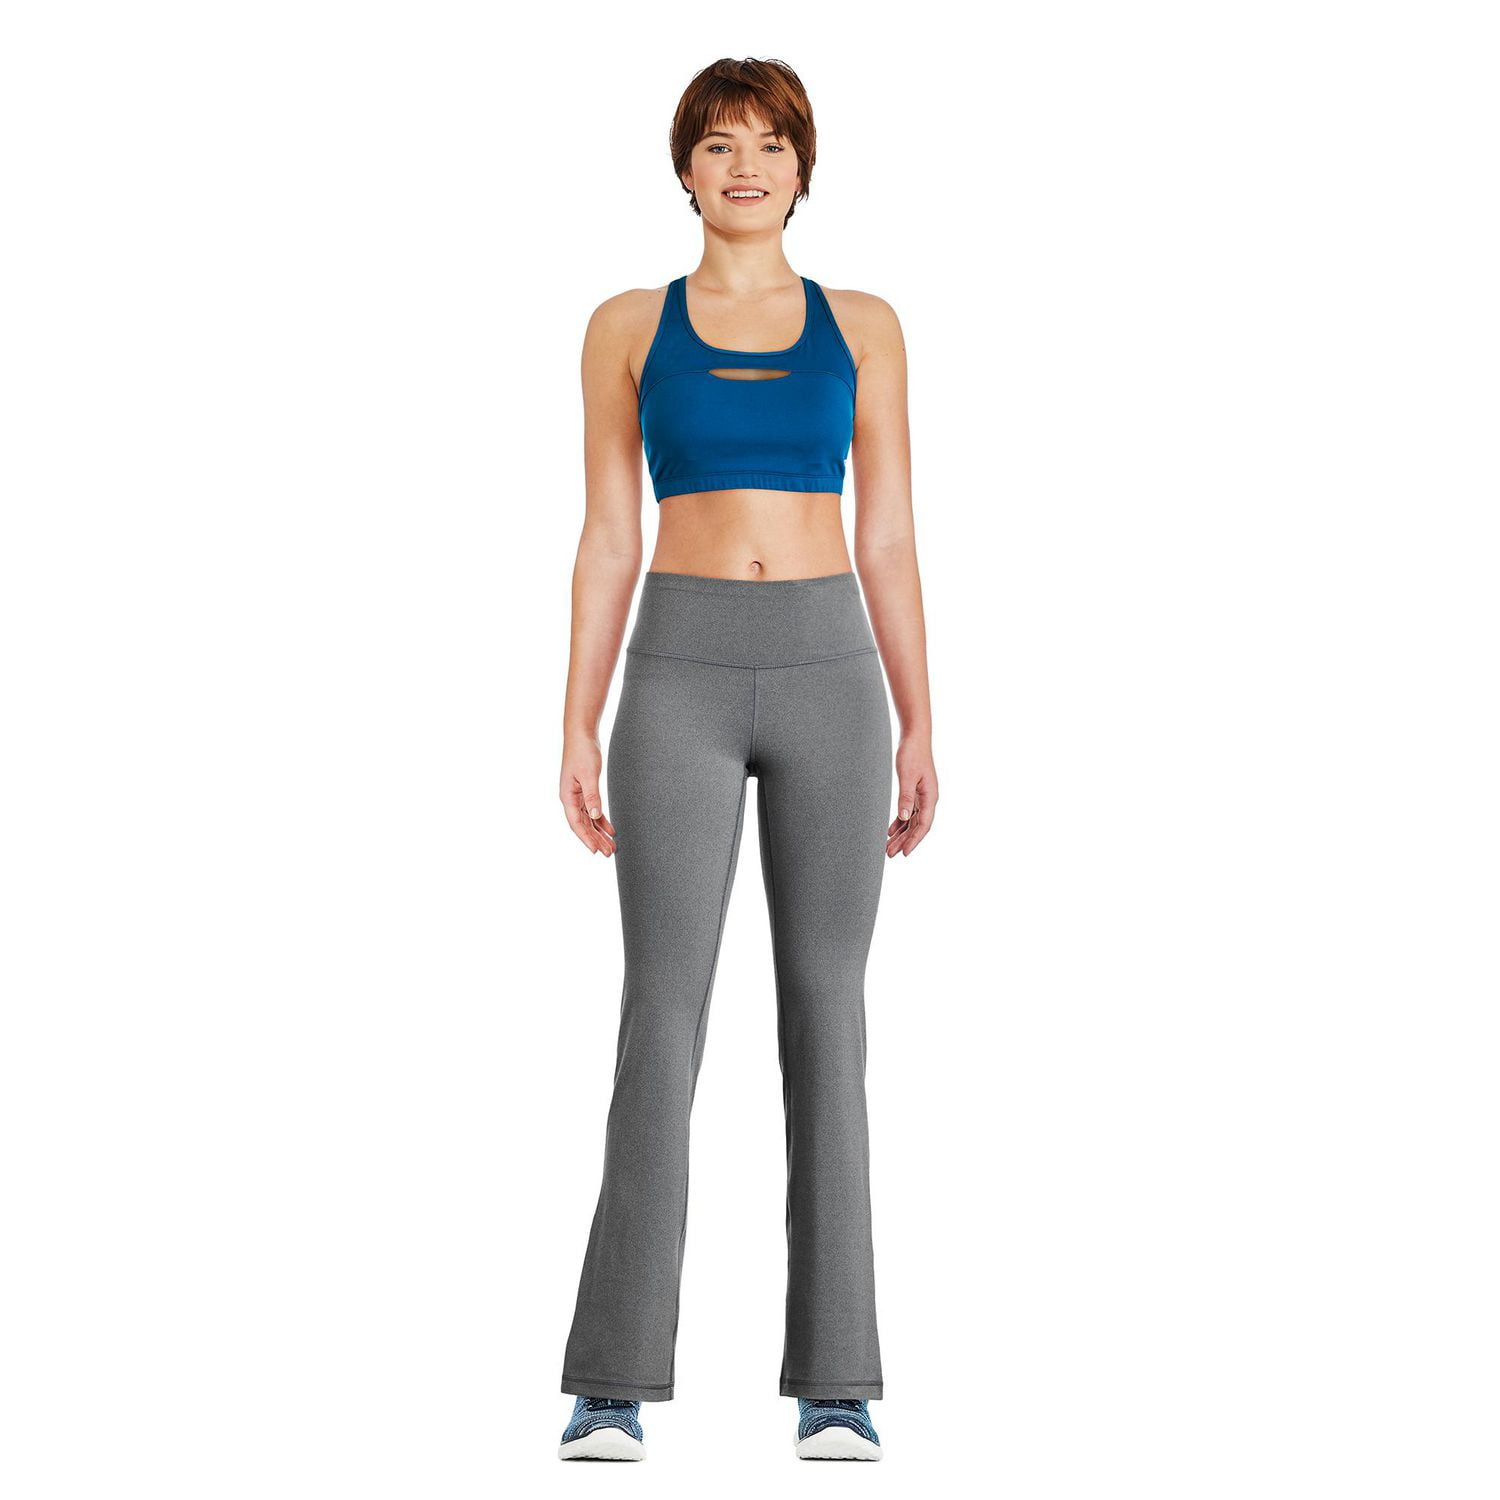 Sport Pants Women Athletic Works,Printed Yoga Pants High Waist Loose  Straight Long Pants Gray 4